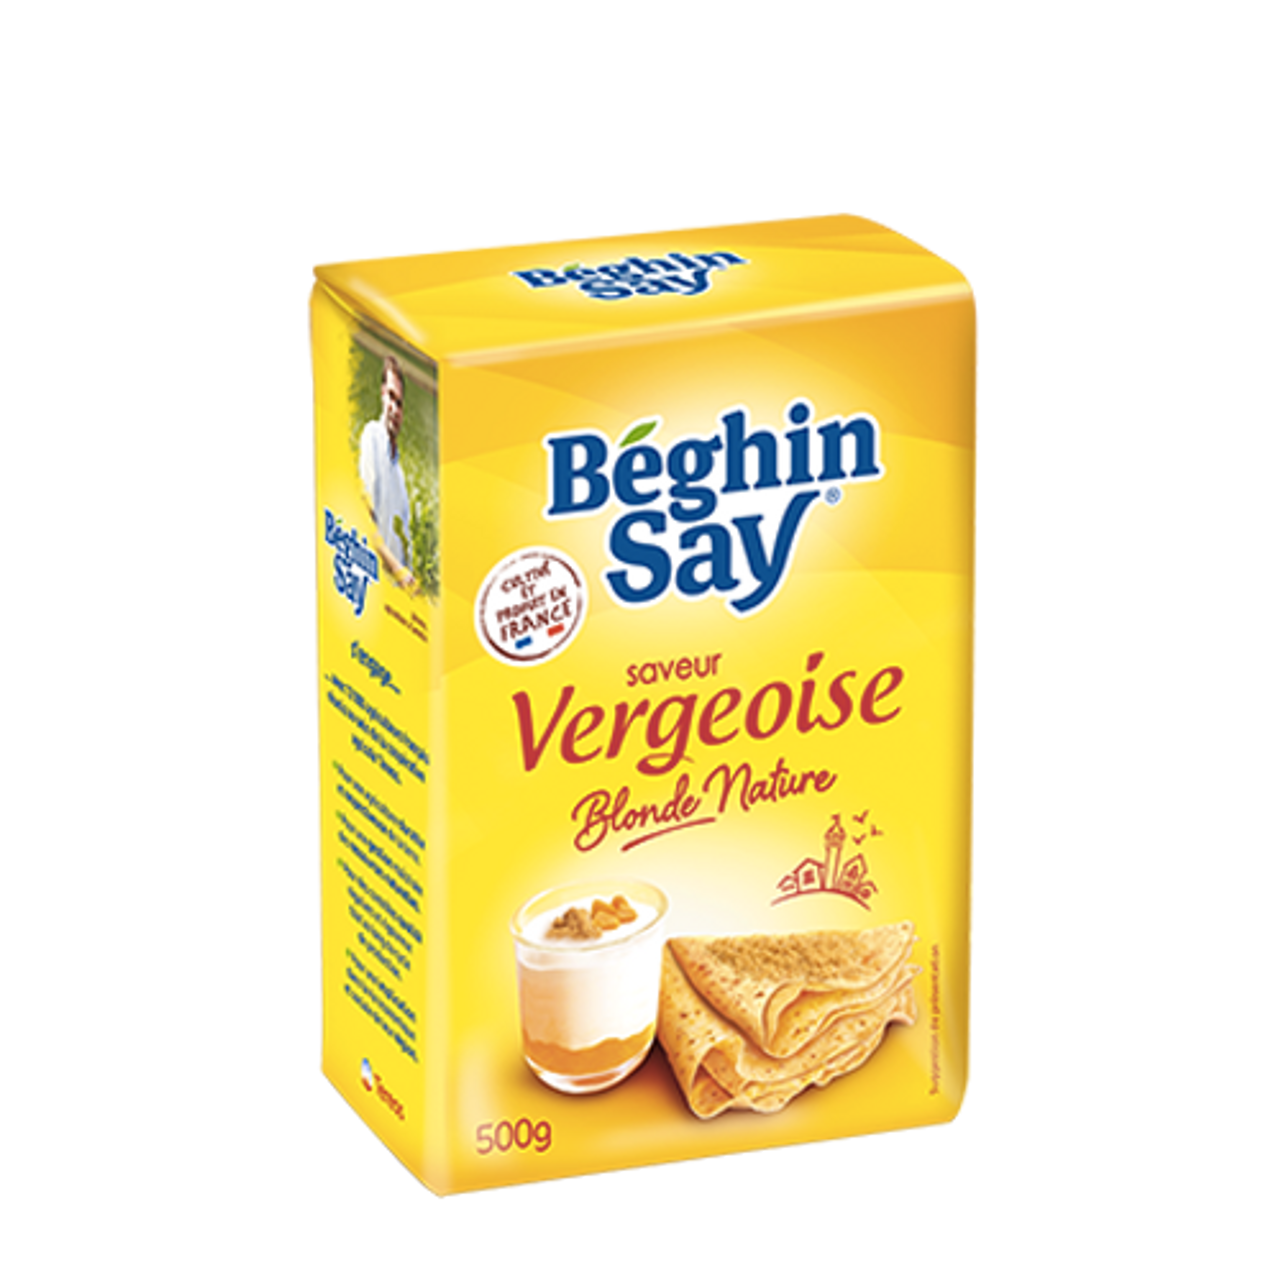 Béghin Say Brown Vergeoise (Dark Caramelized Beet Sugar) 500g